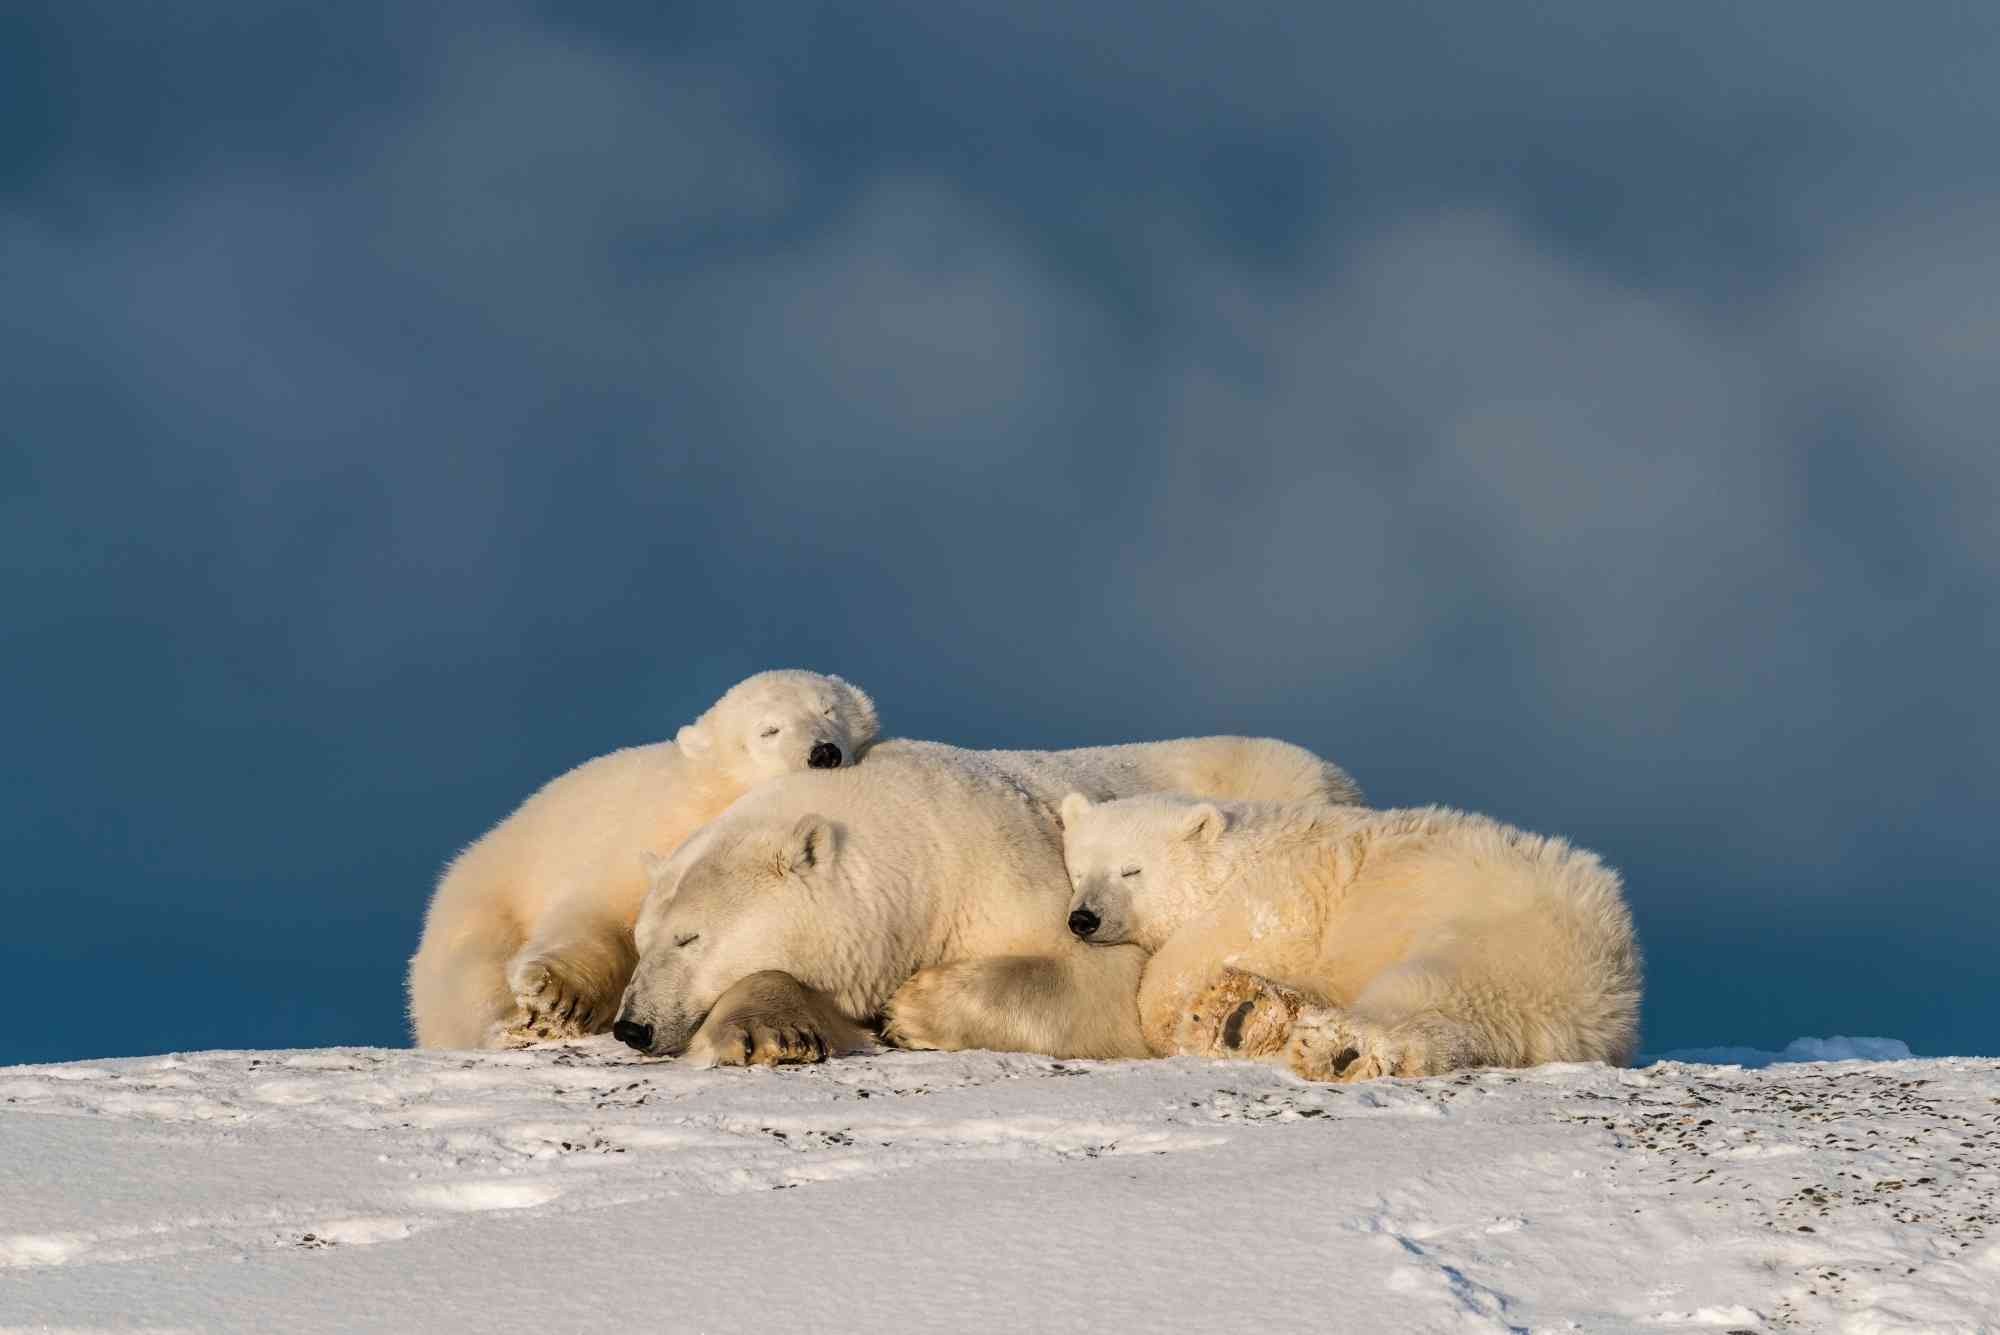 2014.10.10 - Polar bear and cubs cuddle and sleep in snow - Kaktovik, Alaska - Afripics - Alamy Stock Photo